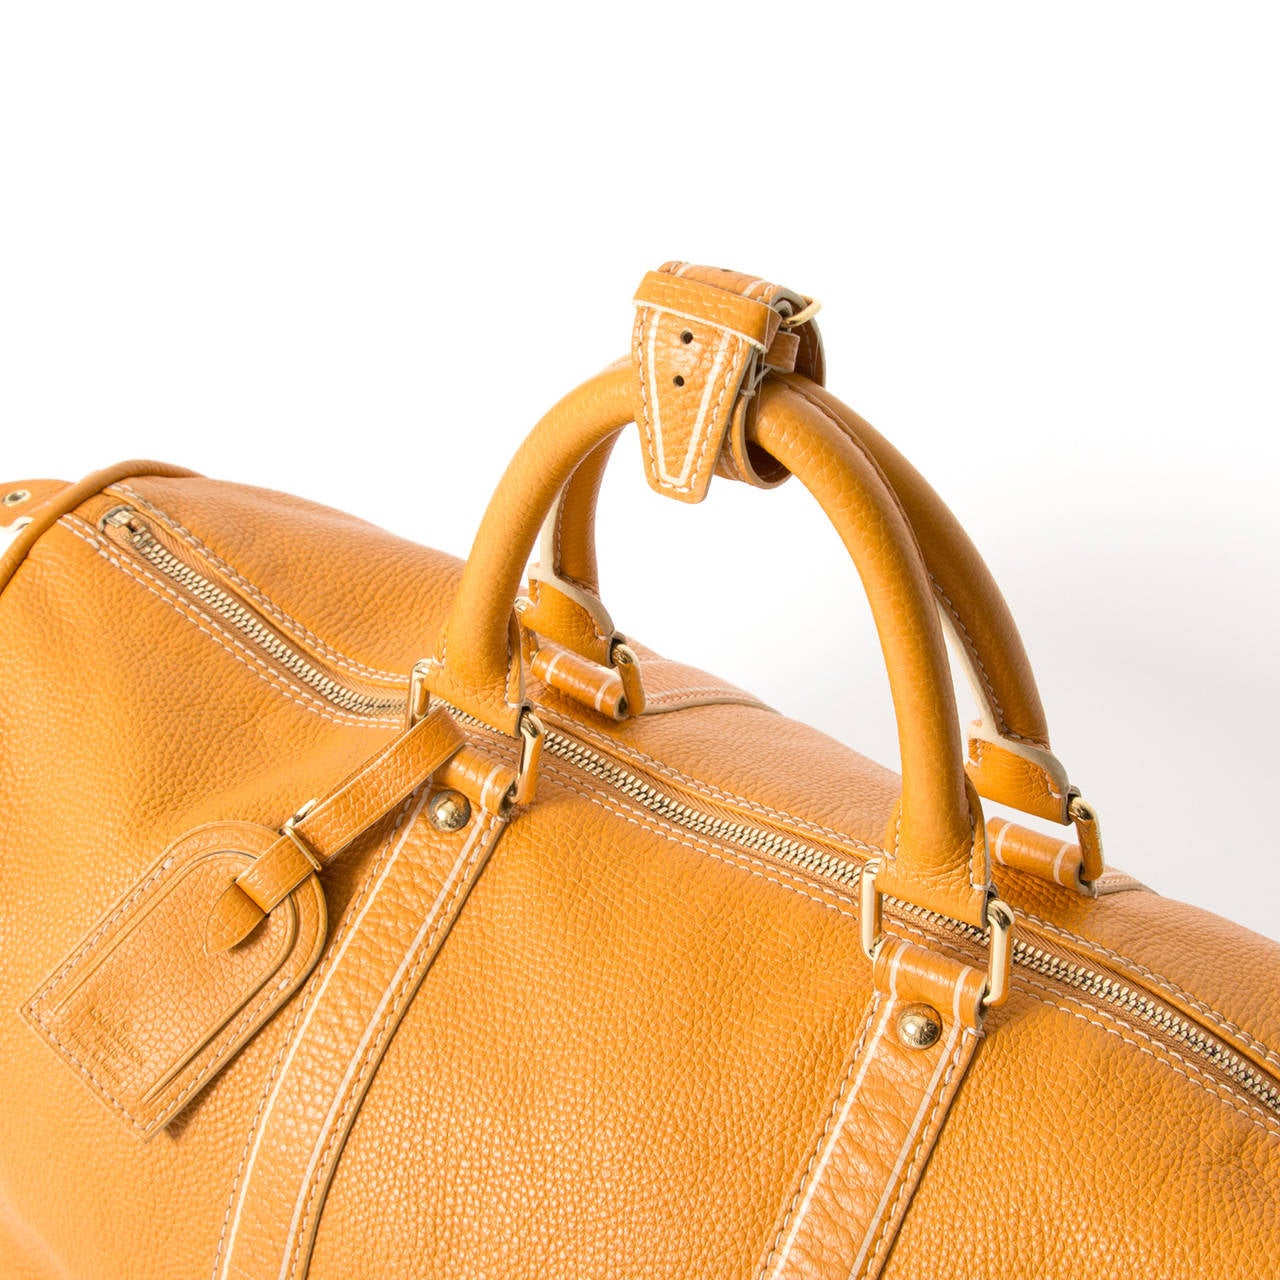 Louis Vuitton Keepall Tobago Yellow Runway Travel Bag at 1stdibs